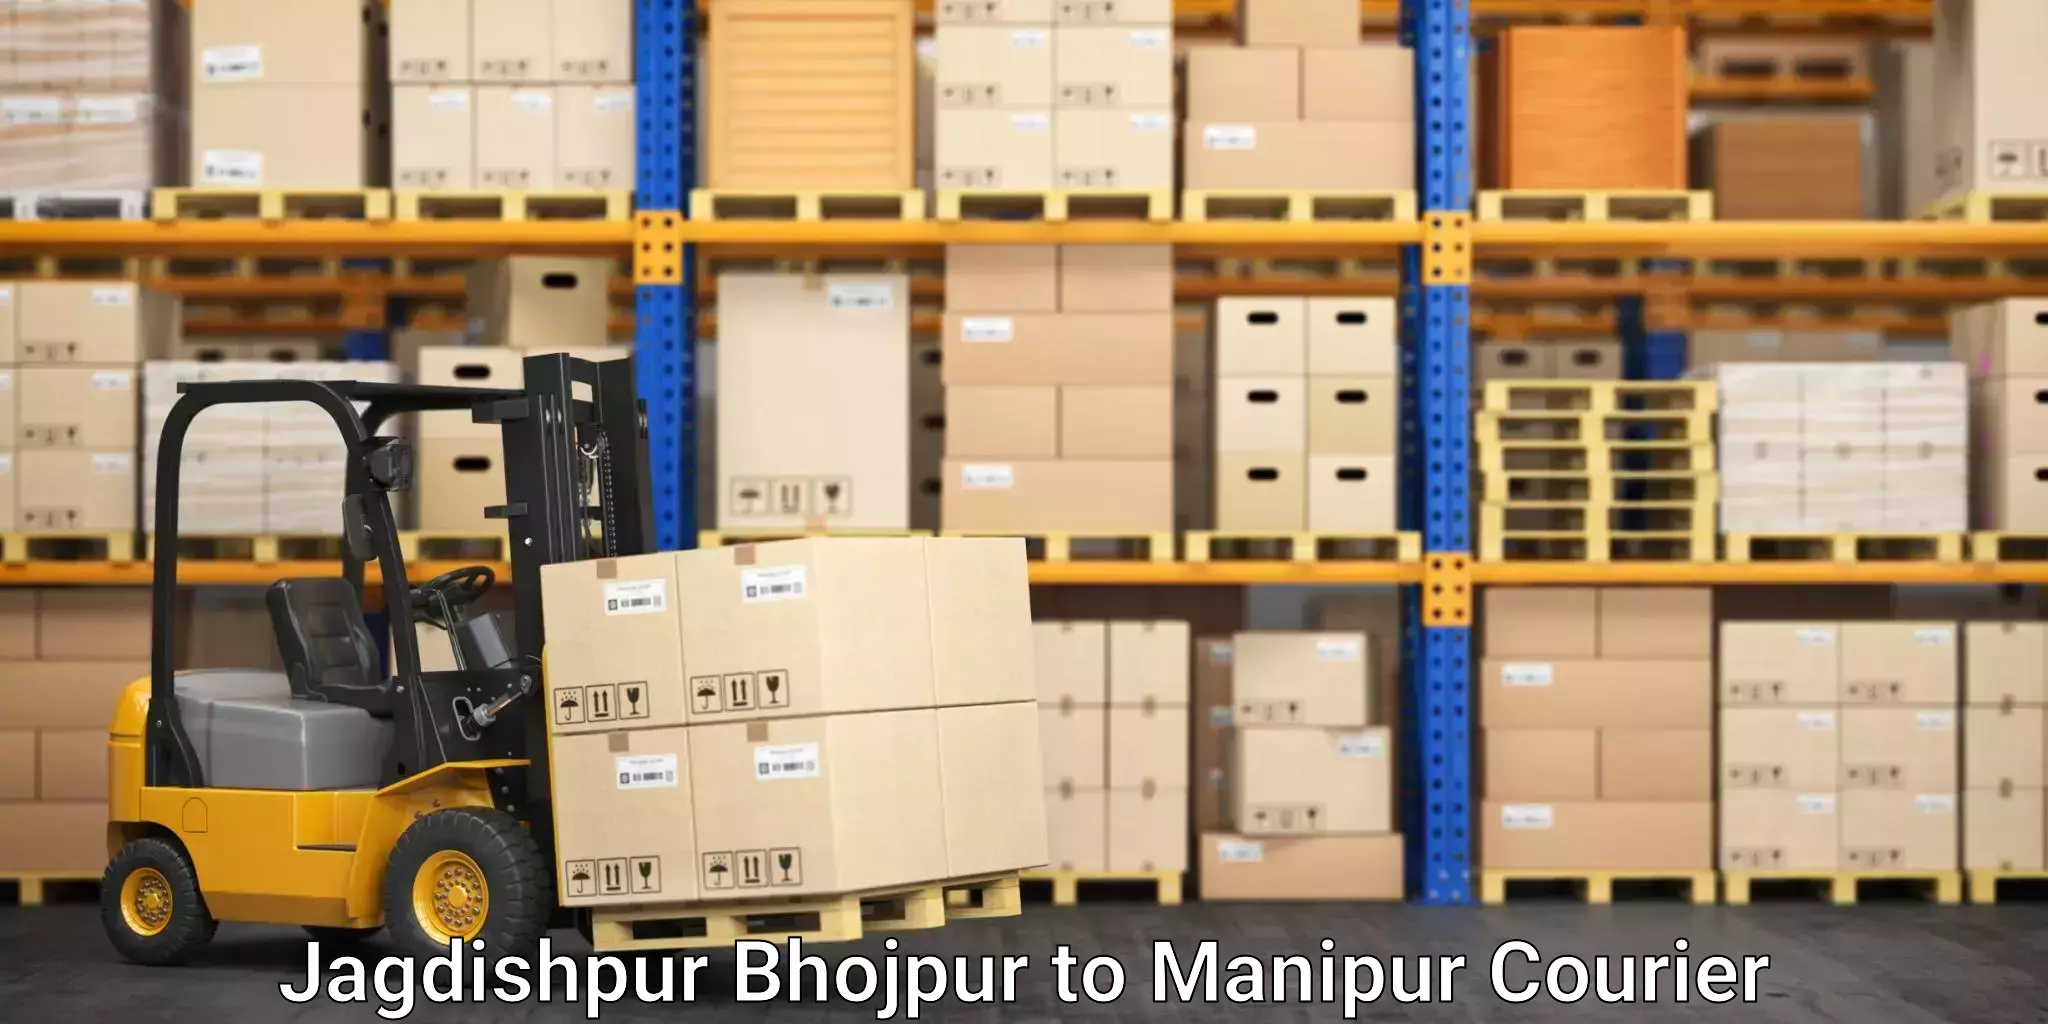 Professional moving company Jagdishpur Bhojpur to Chandel